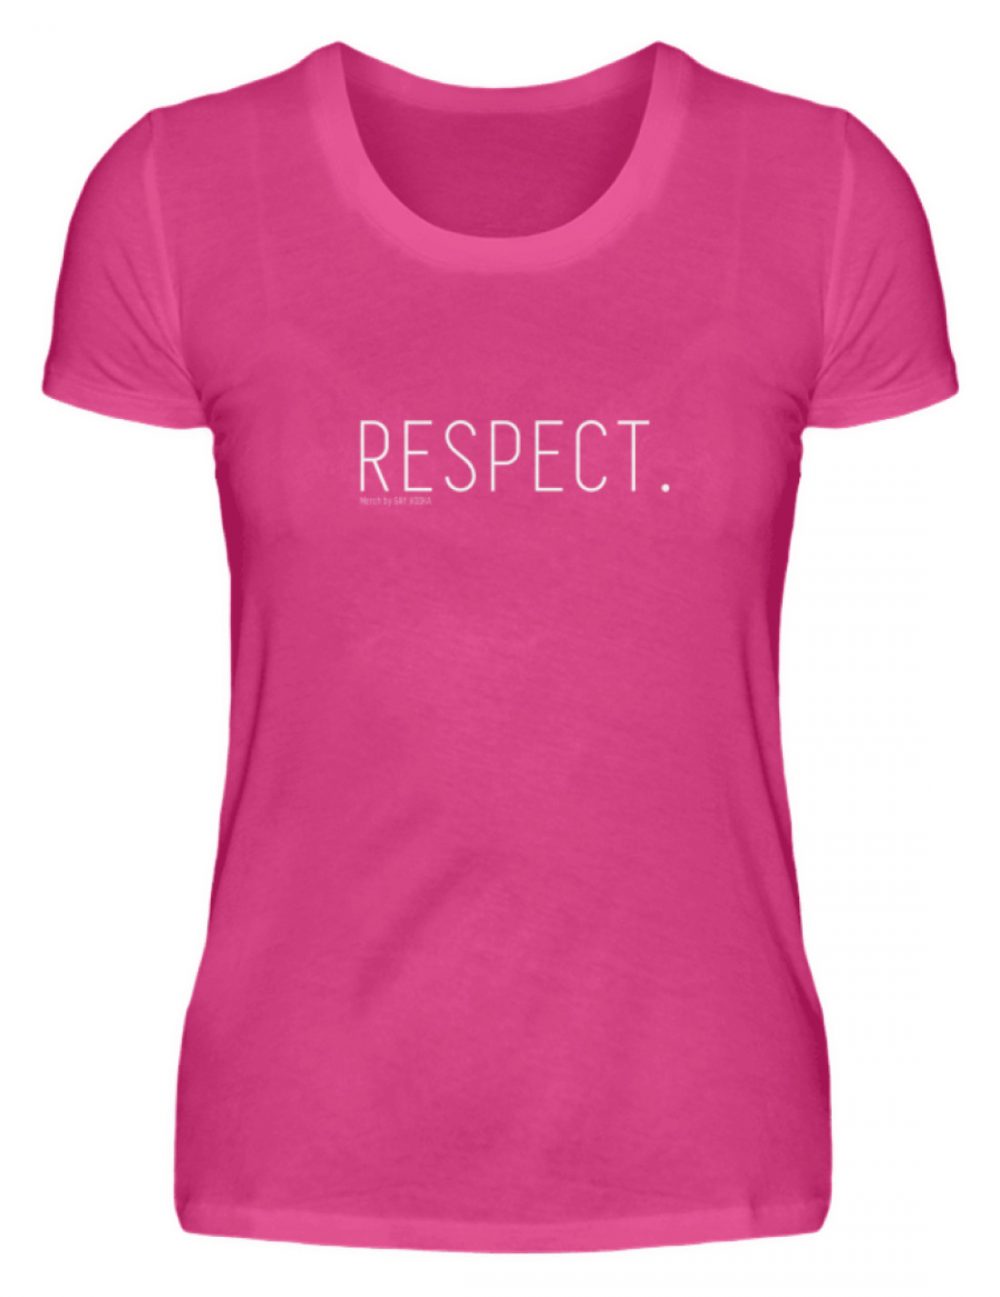 RESPECT. - Damen Premiumshirt-28